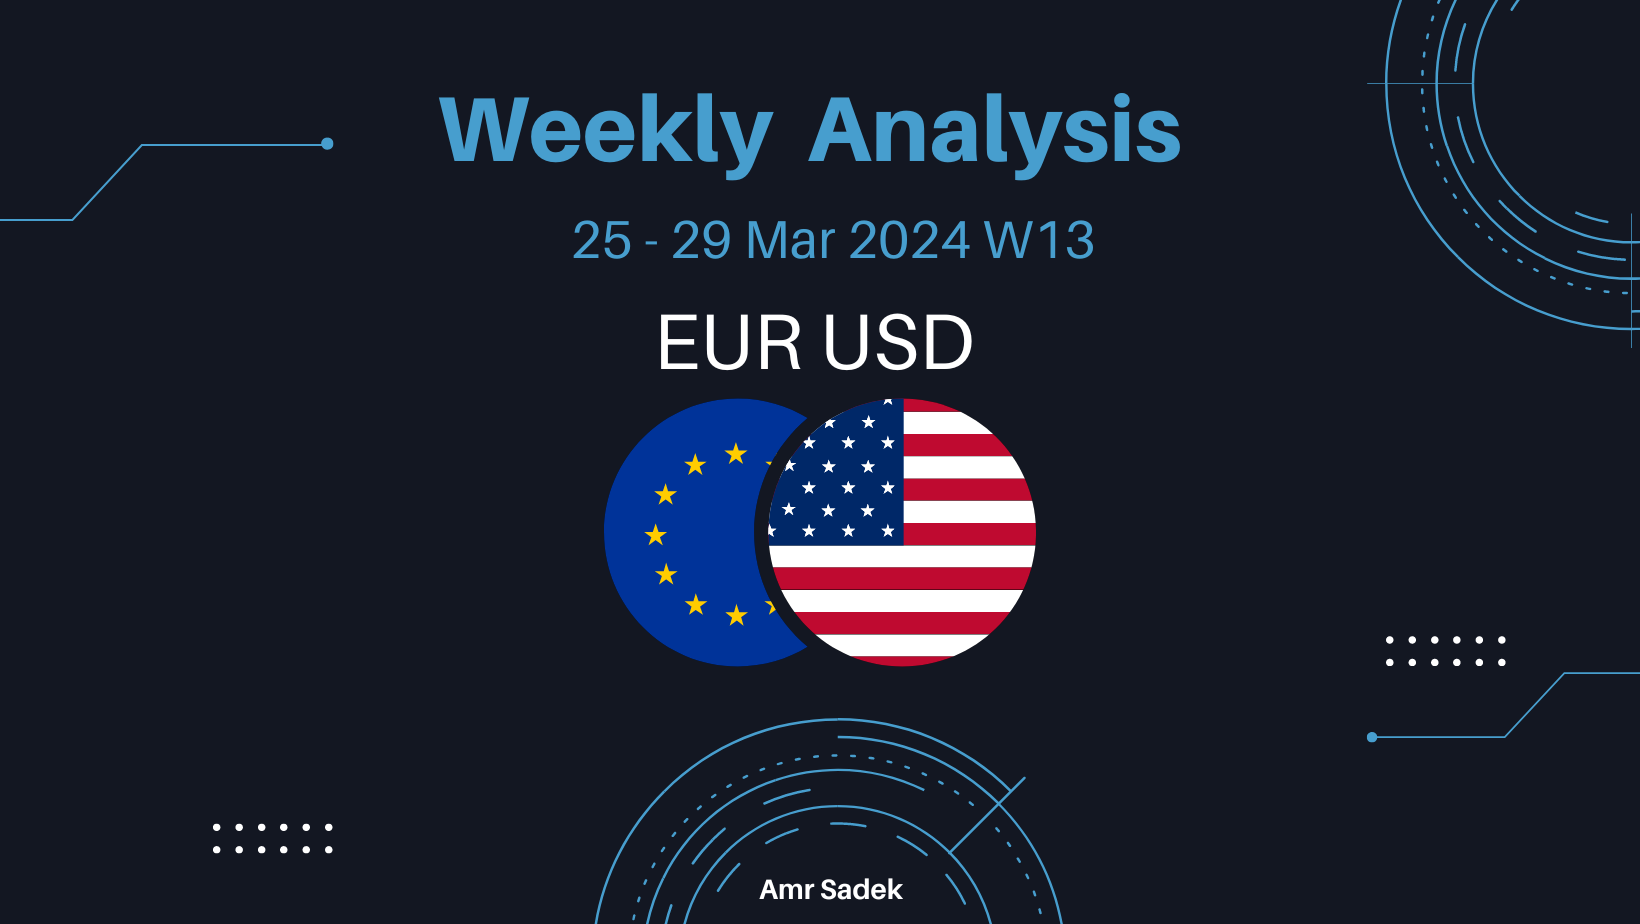 EURUSD 25-29 Mar 2024 W13 Weekly Analysis